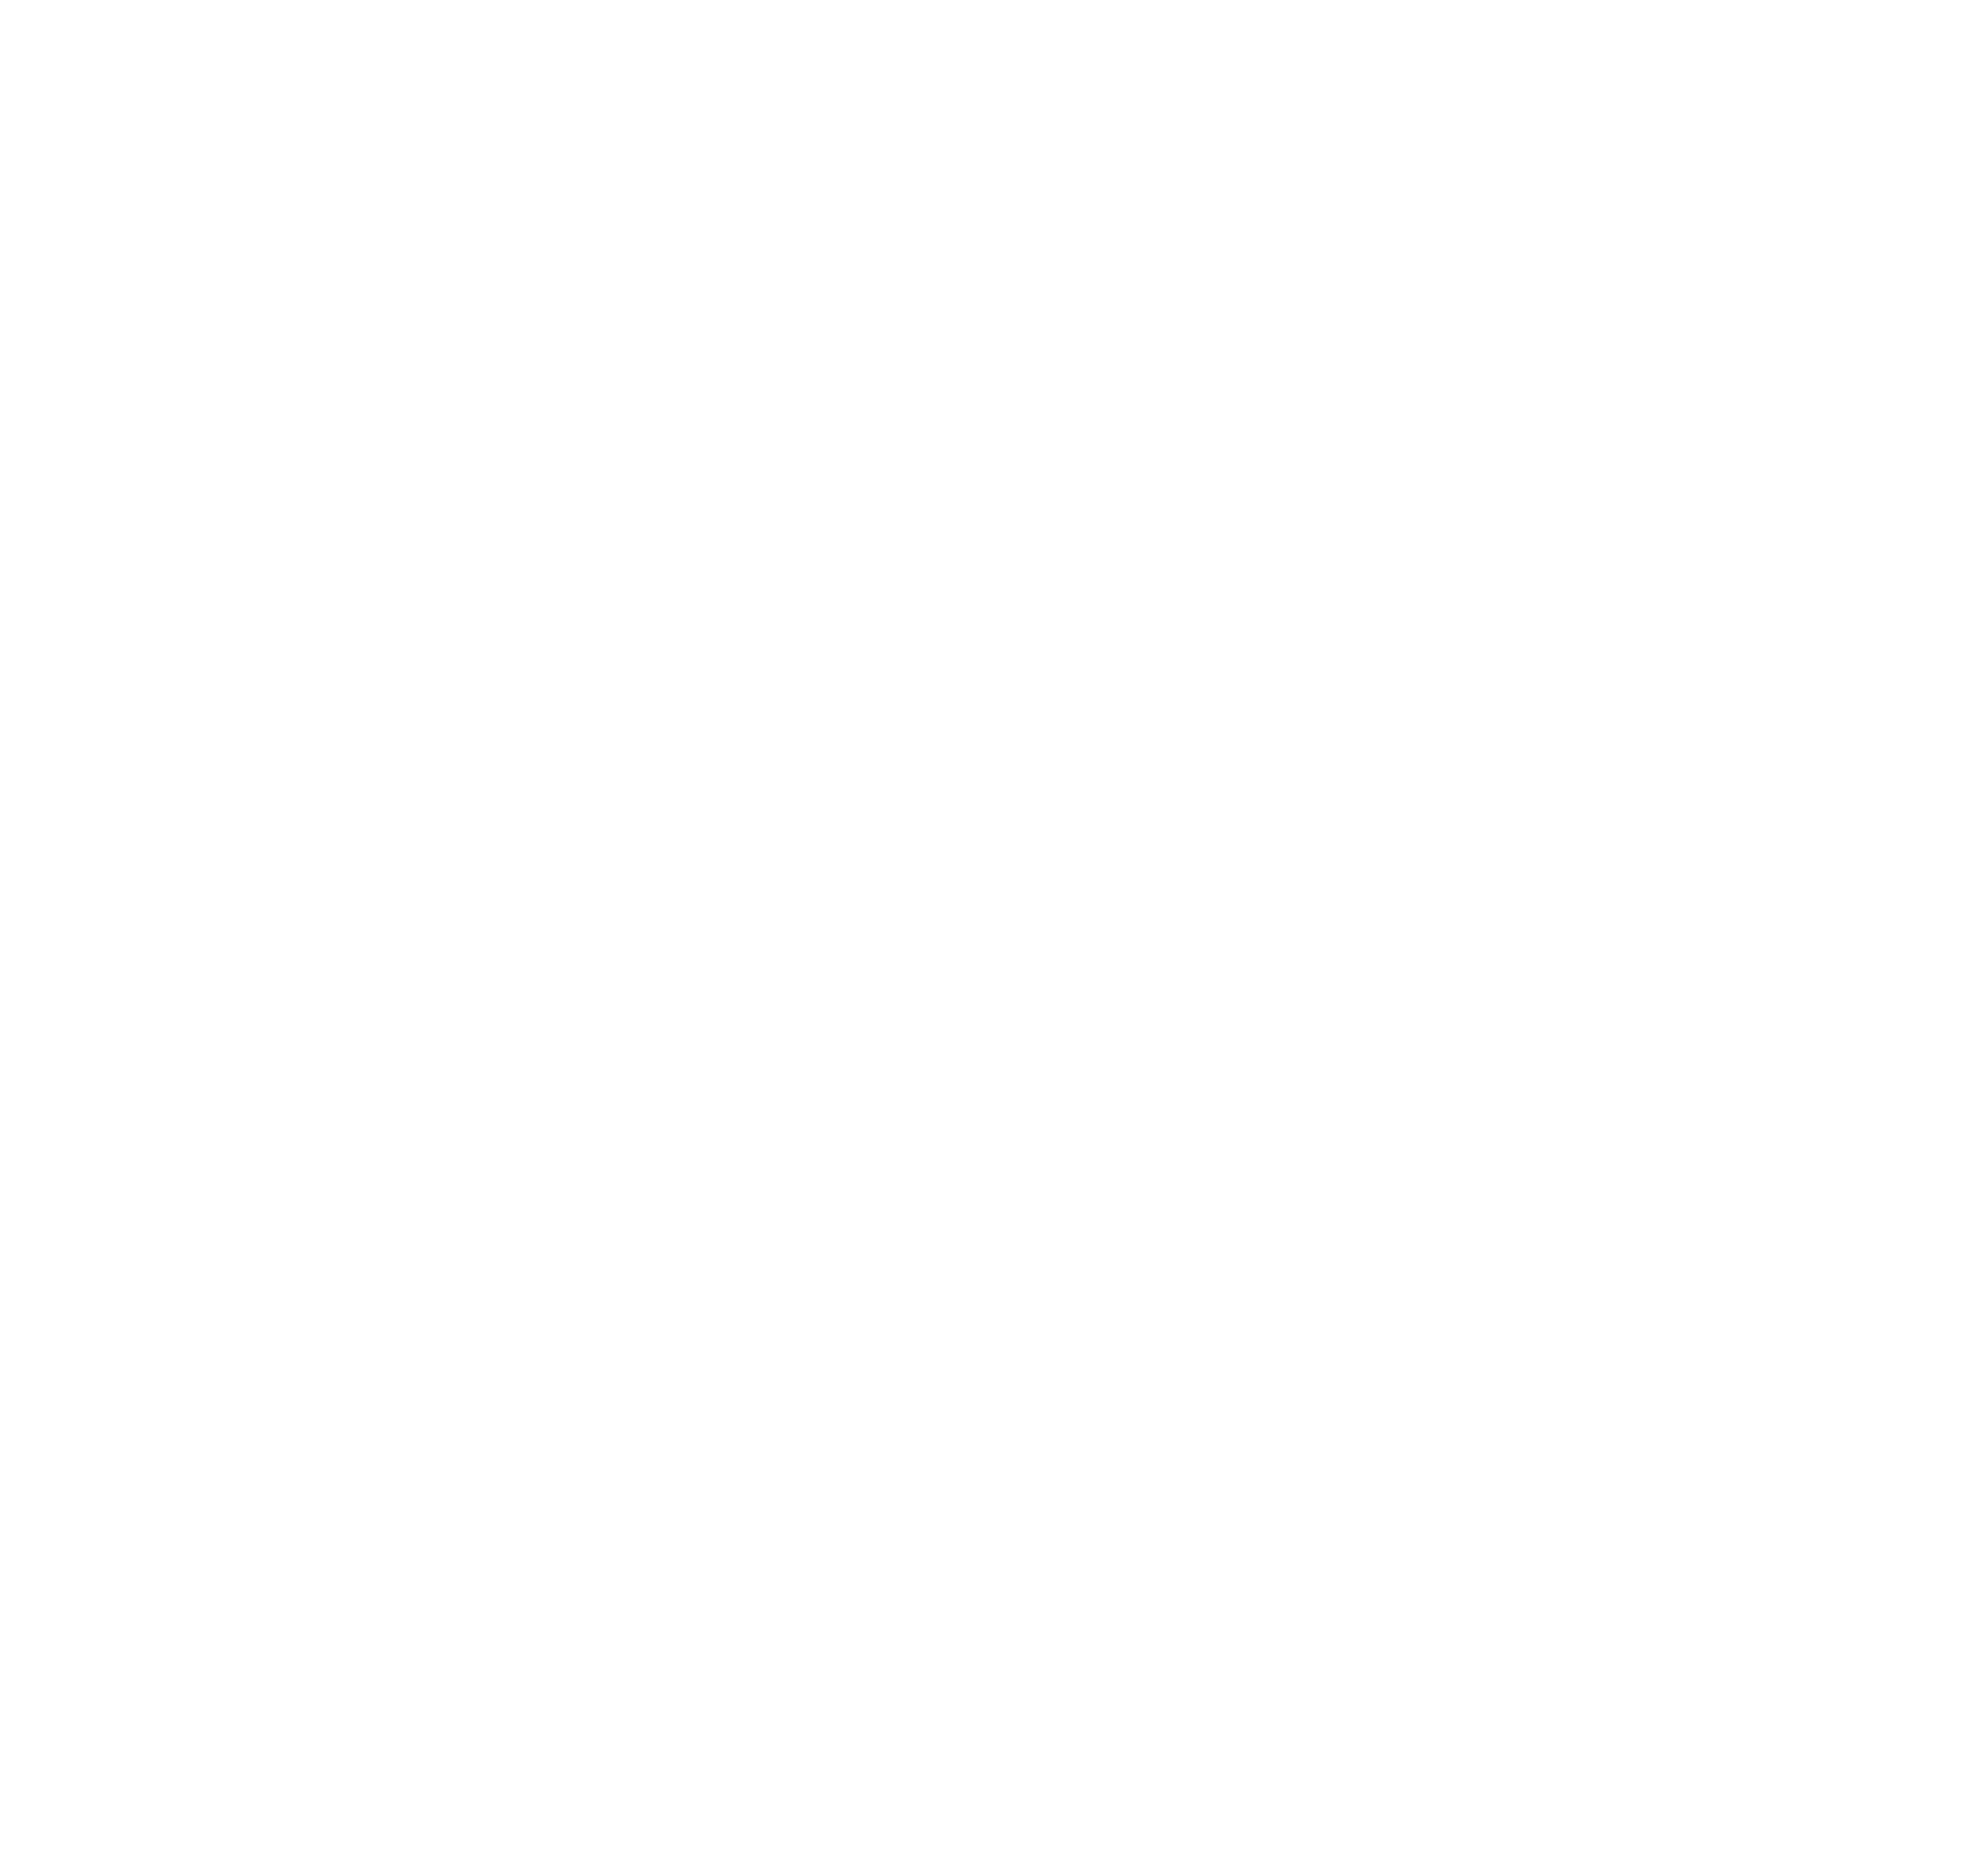 Urbano 106